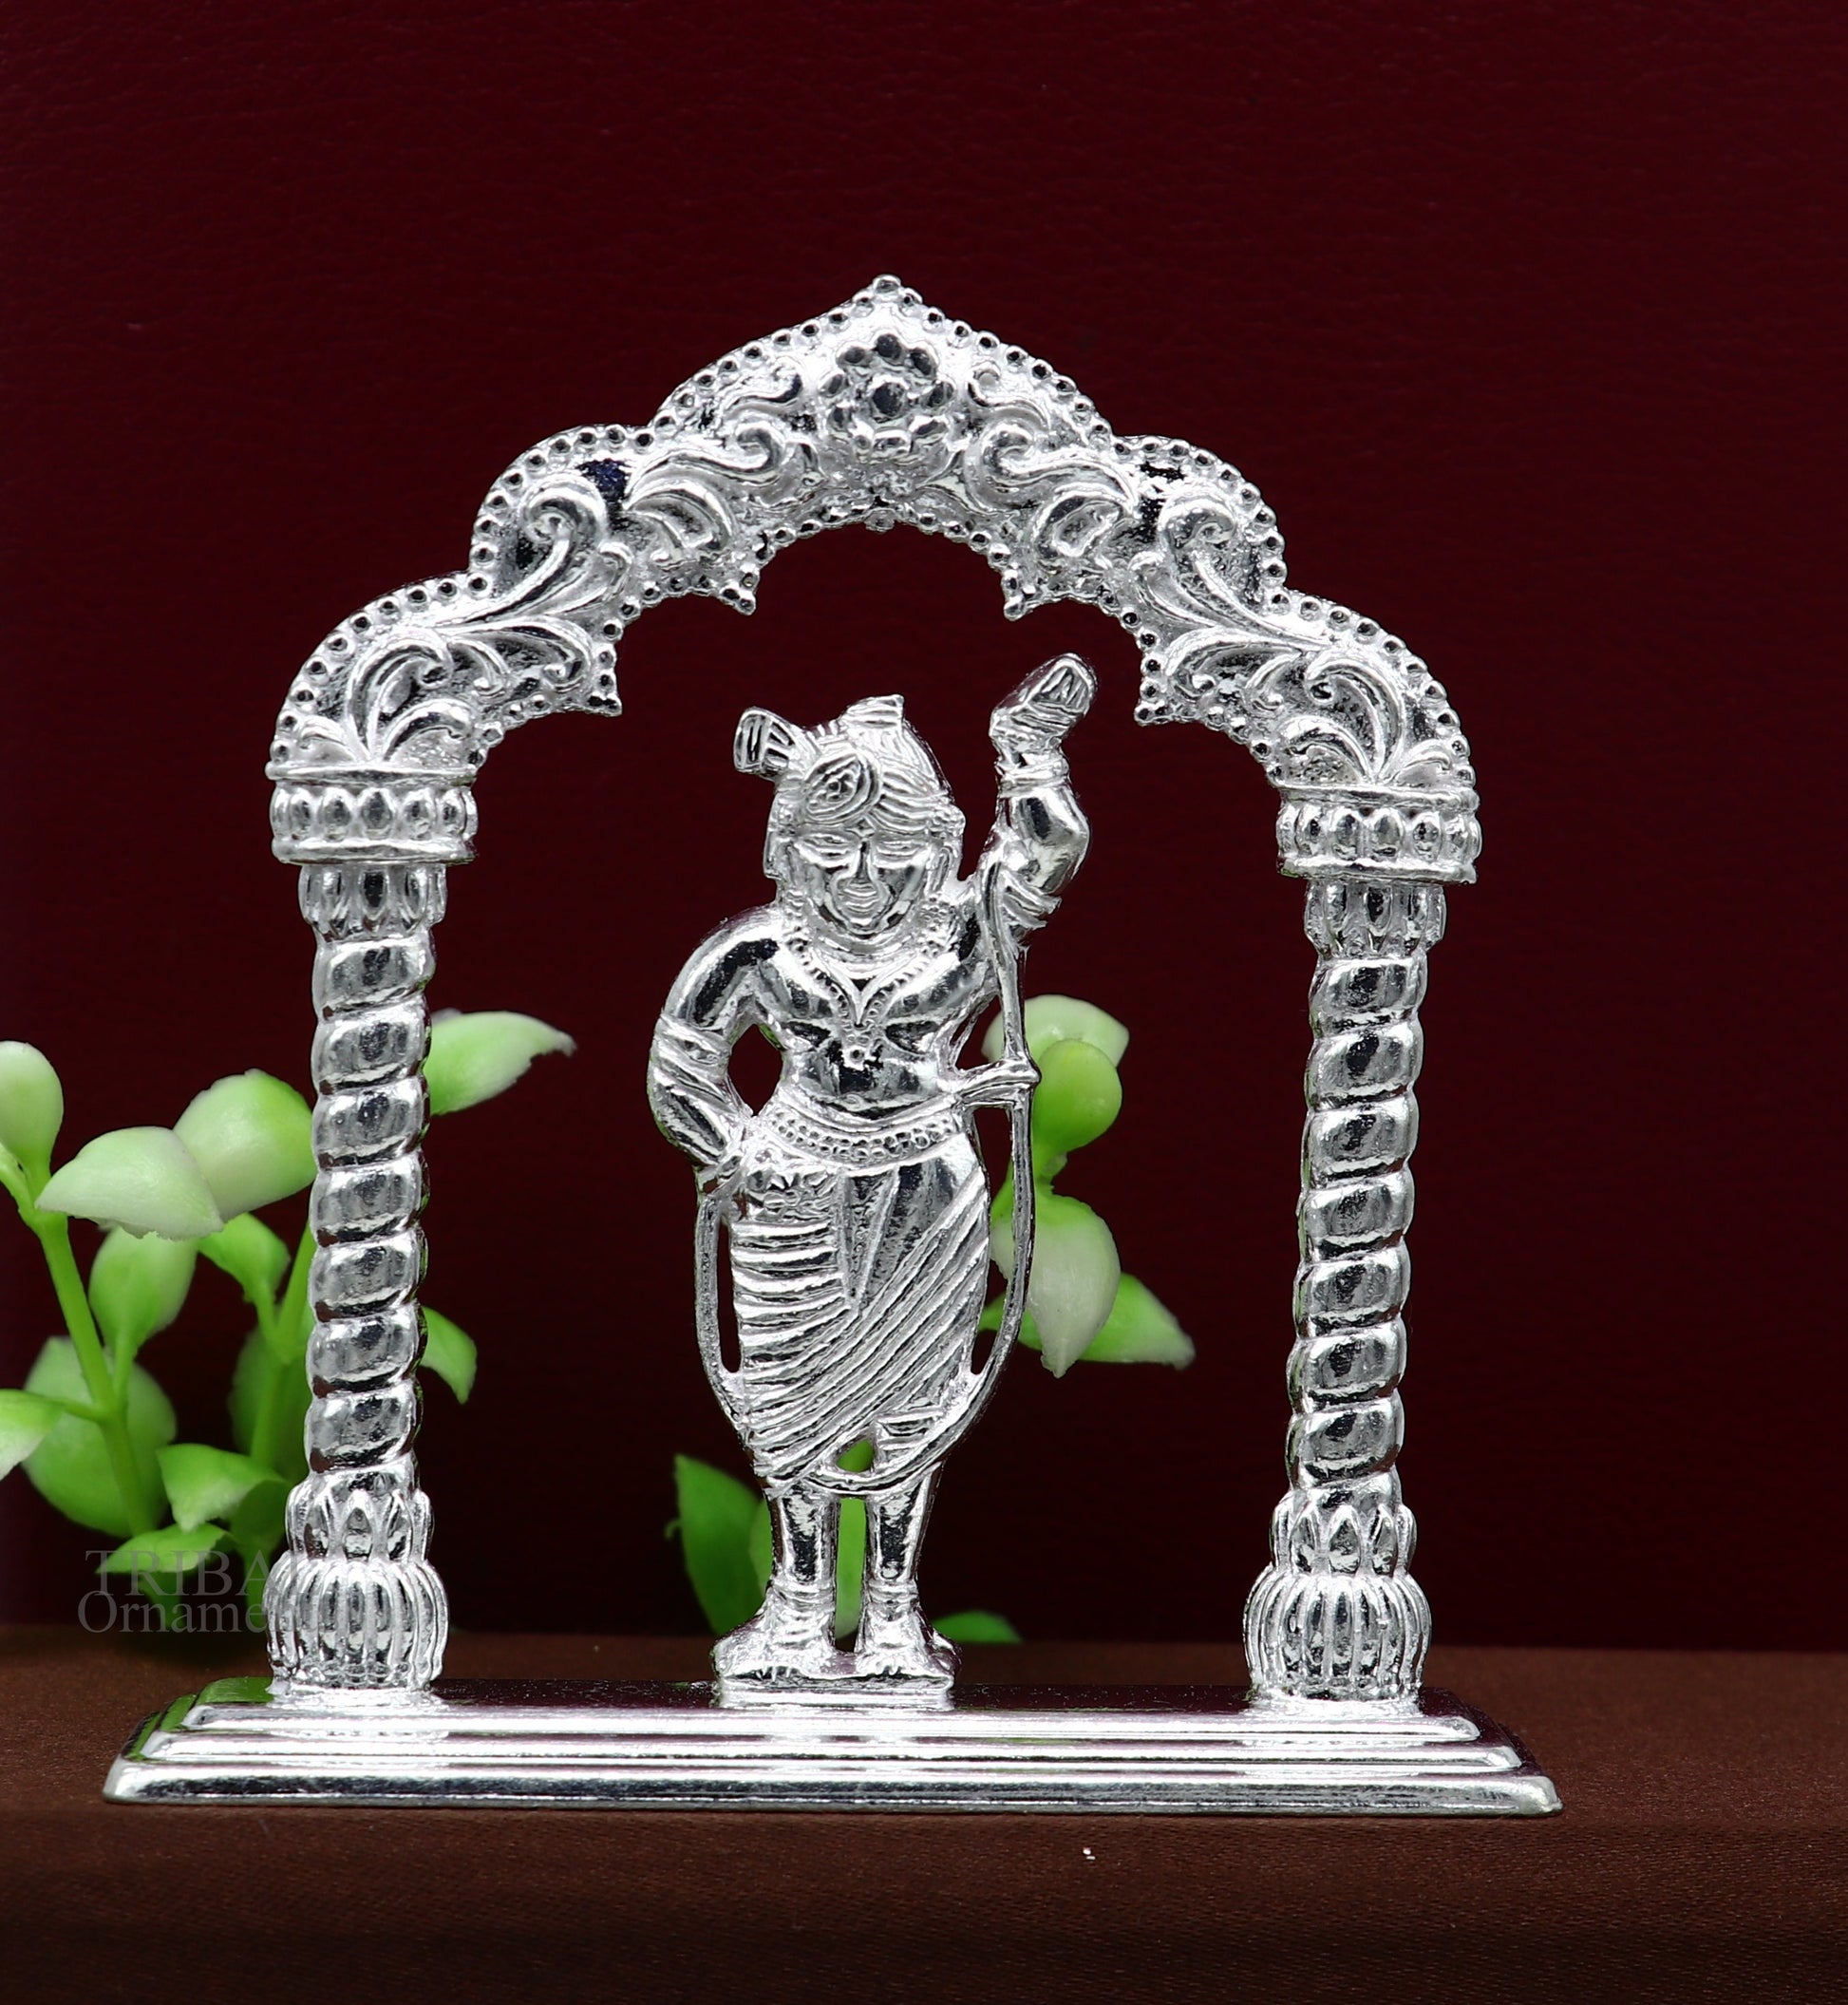 Sterling silver handmade design Indian Idols Lord krishna Shrinathji statue figurine, puja articles decorative gift diwali puja art449 - TRIBAL ORNAMENTS